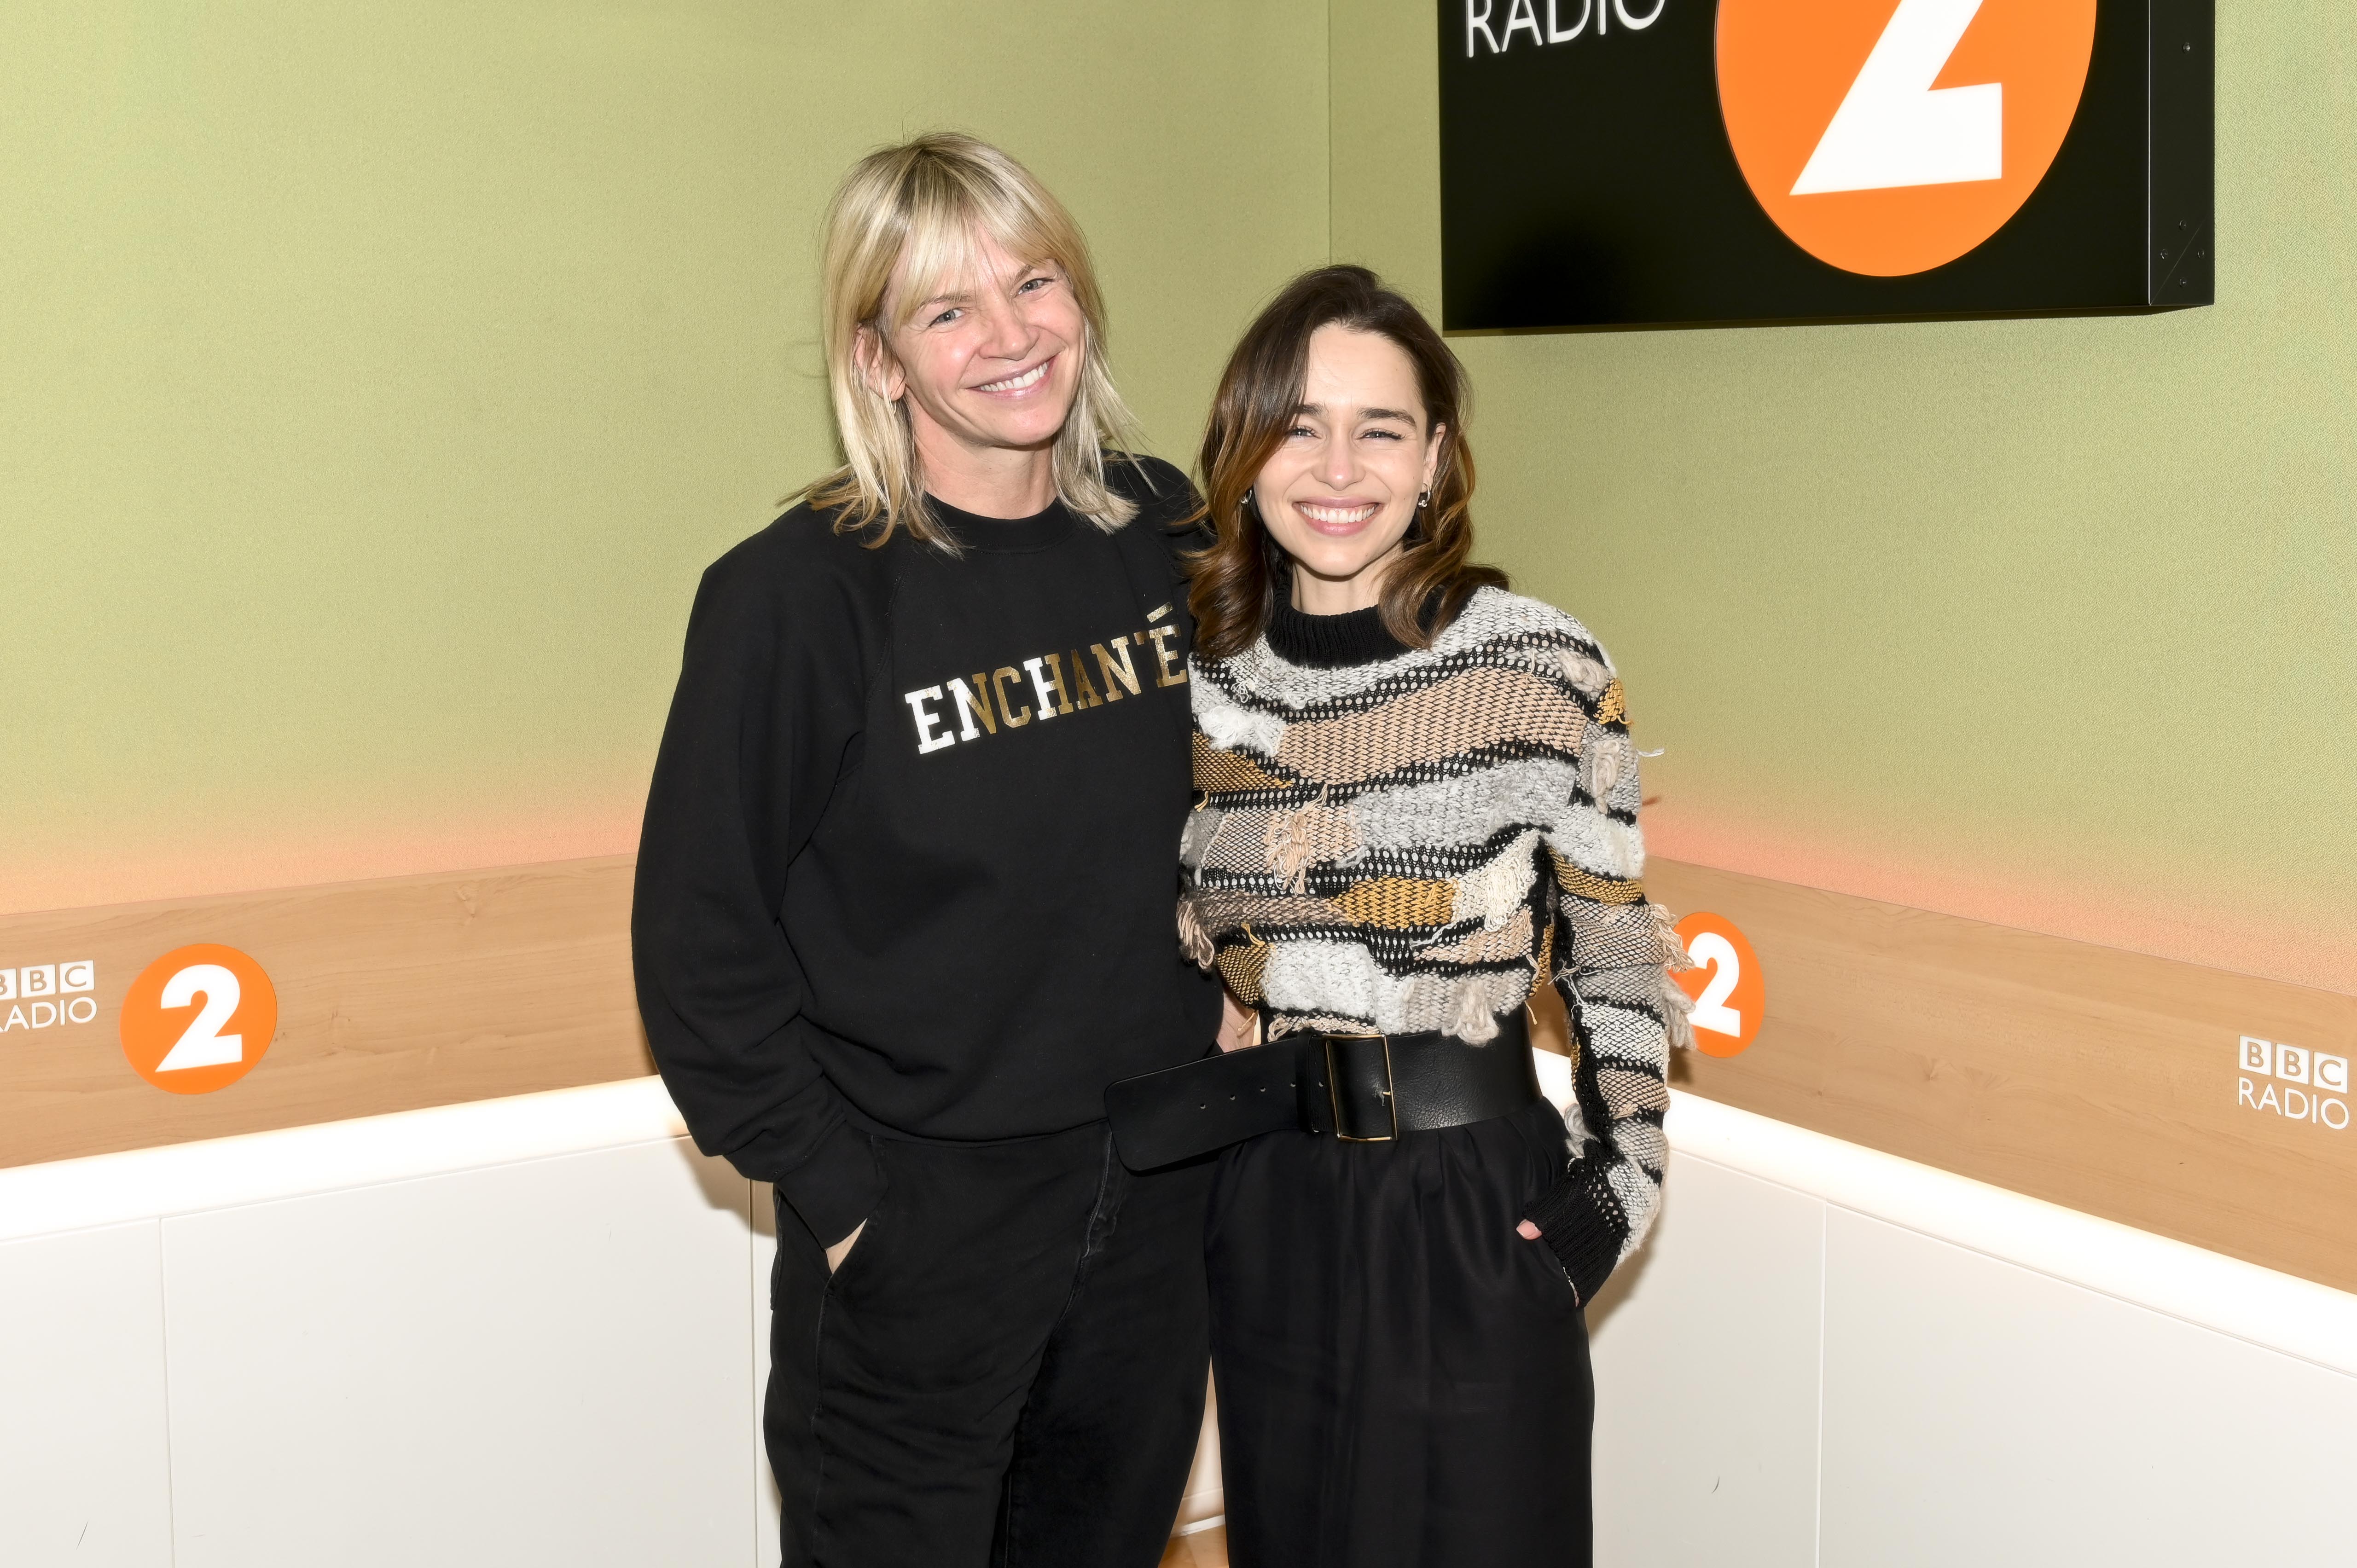 Emilia Clarke on the Zoe Ball breakfast show on BBC Radio 2